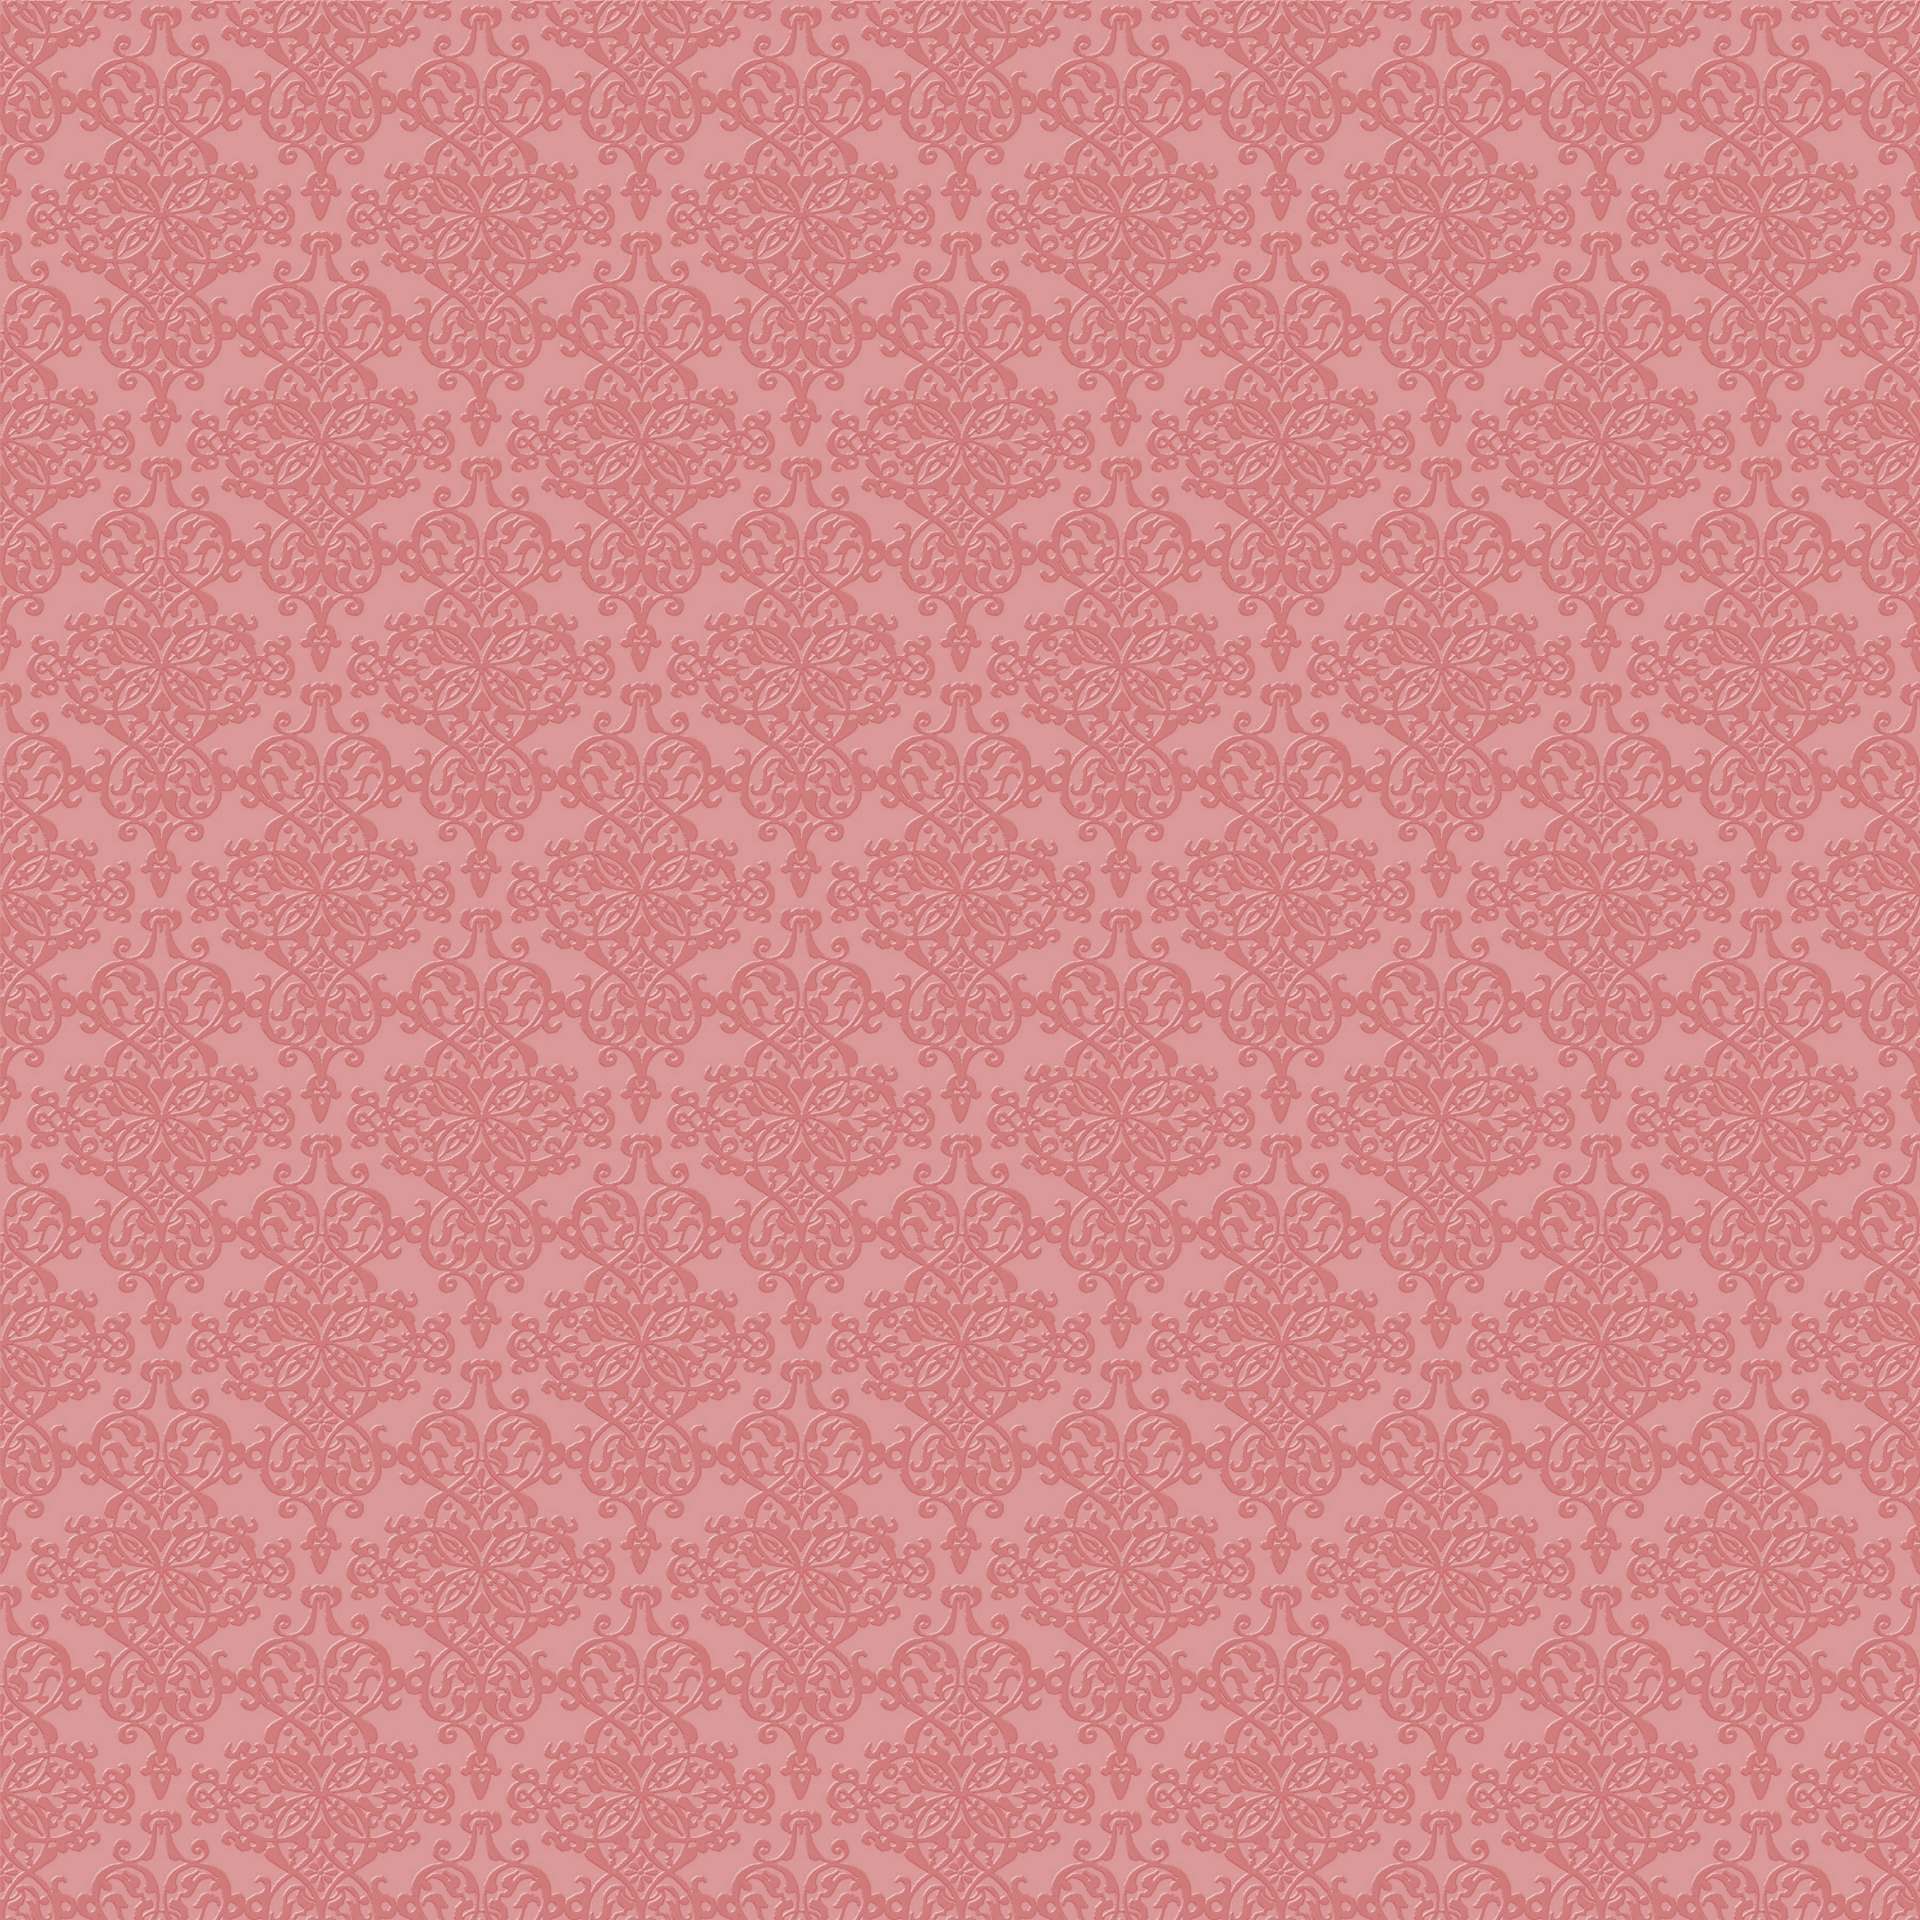 Rose pink damask pattern wallpaper background